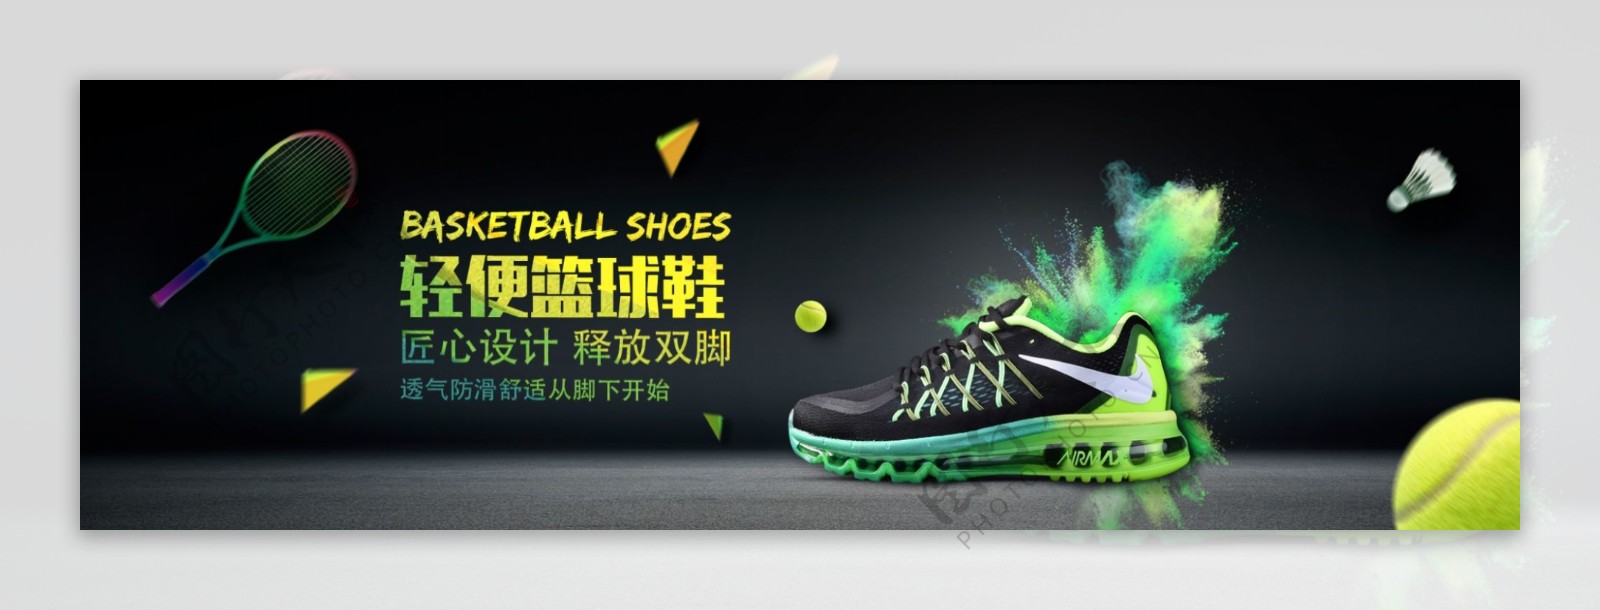 篮球鞋淘宝宣传banner